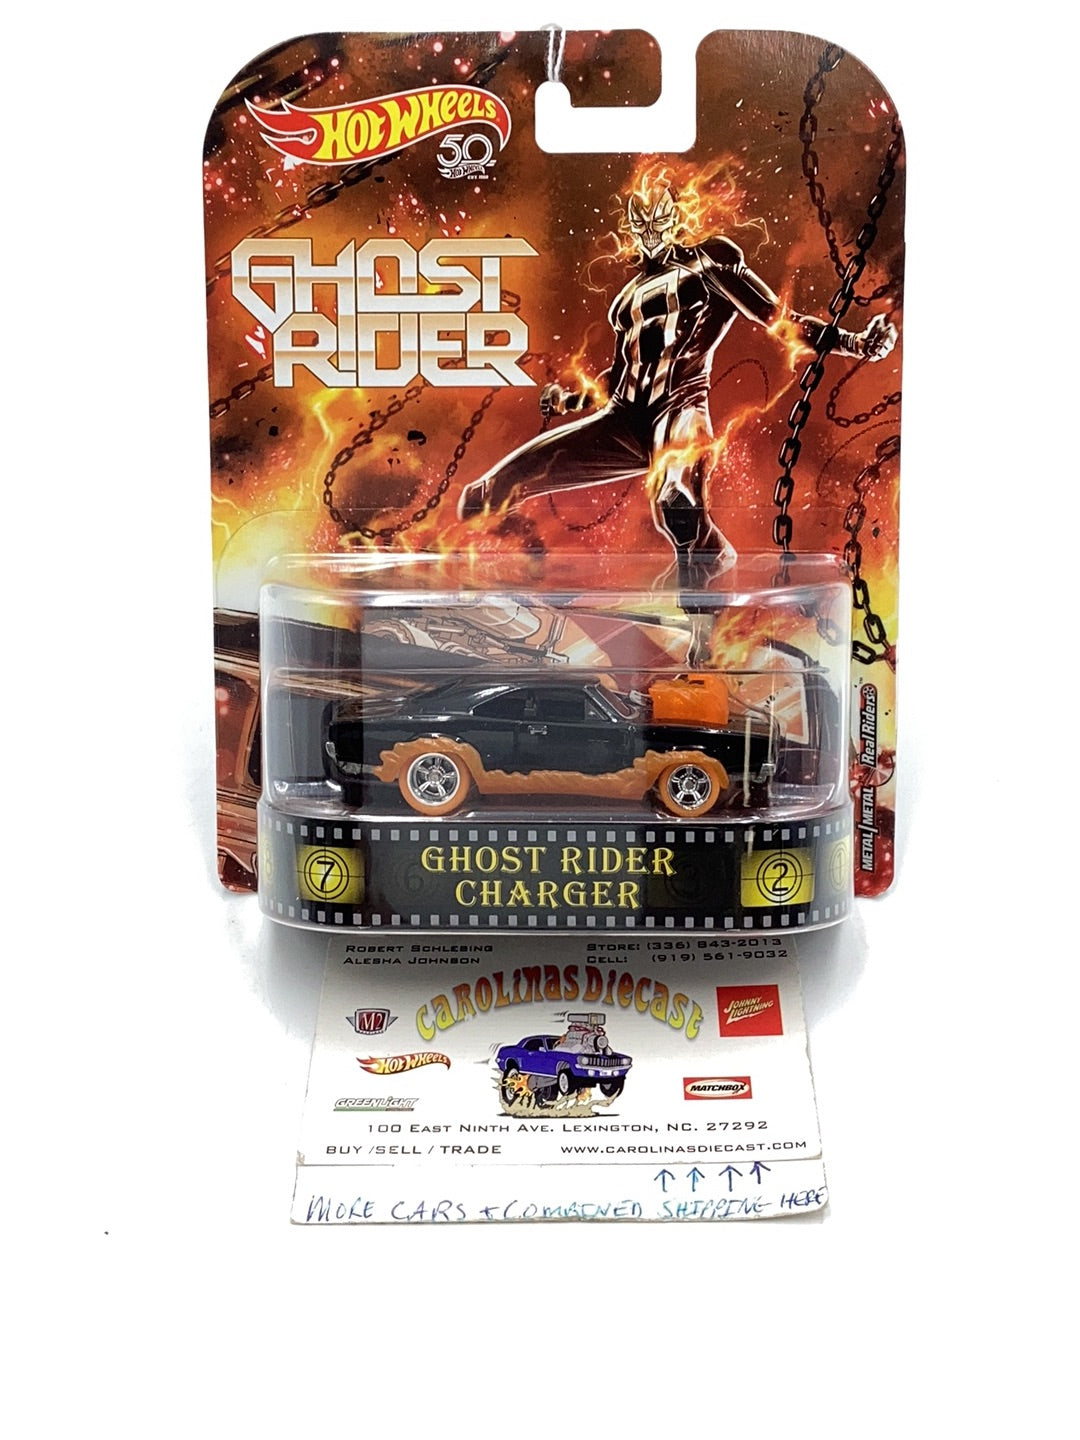 2018 Hot wheels retro entertainment Ghostrider Charger card variant Orange 264F